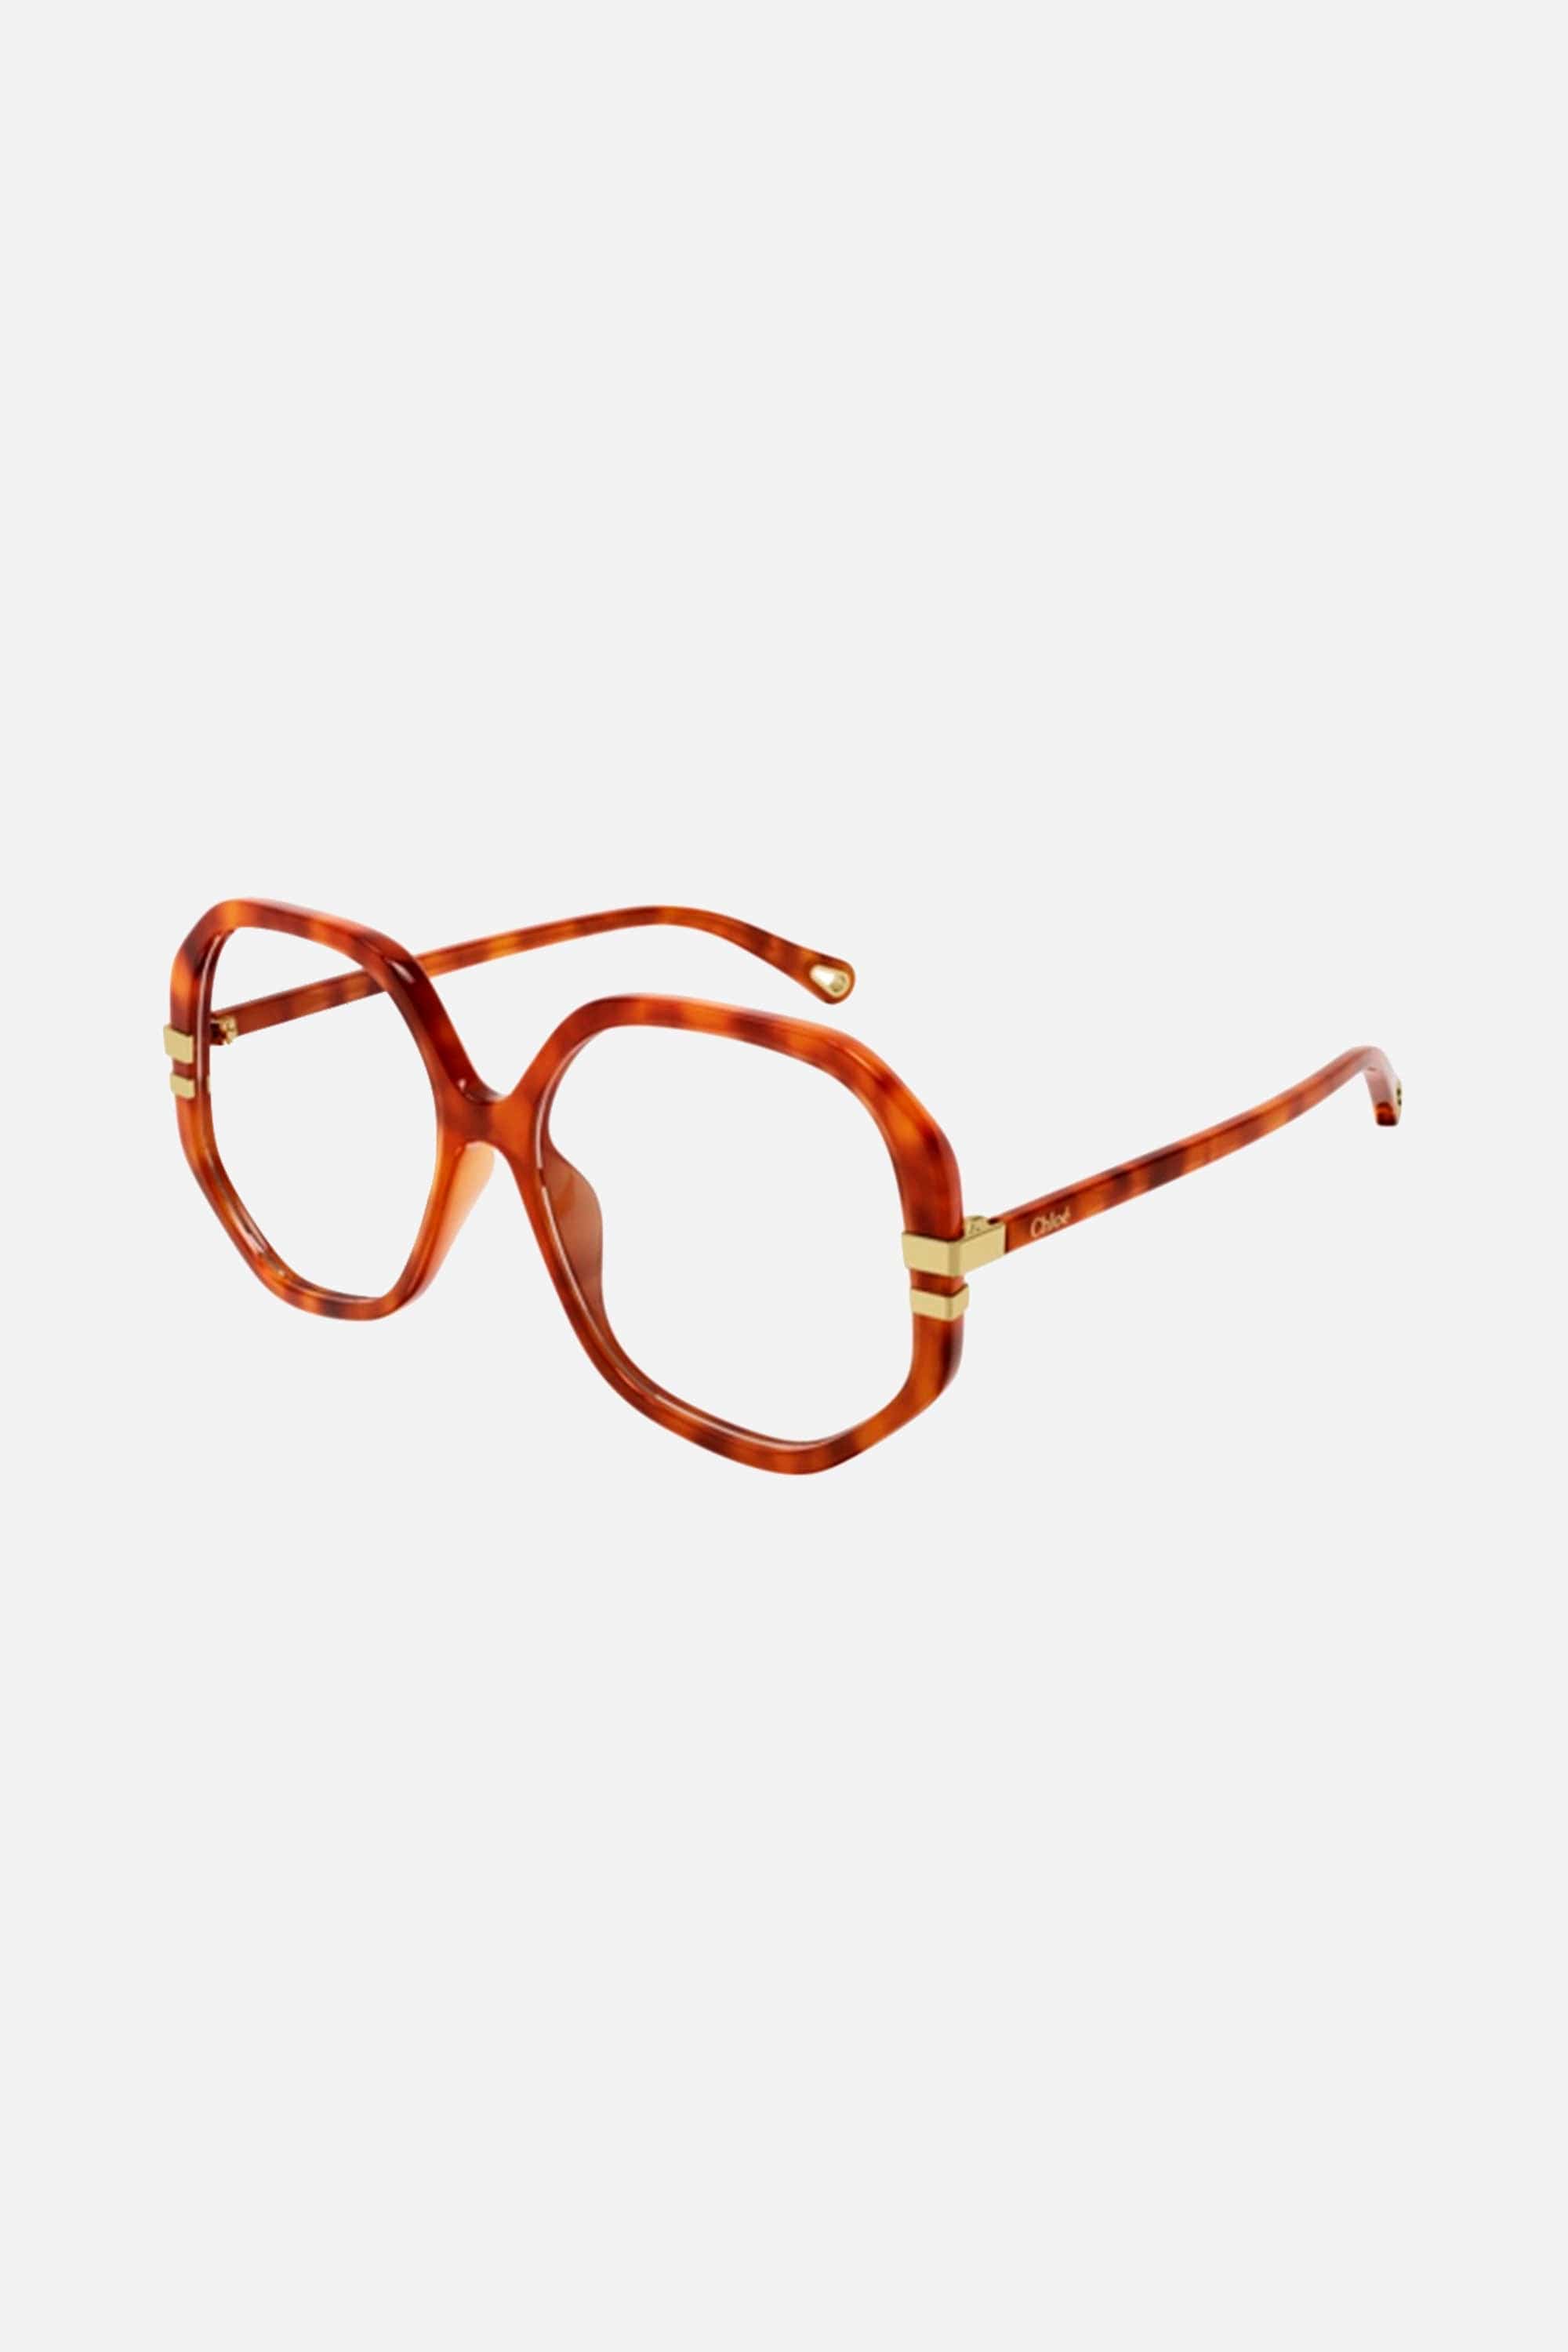 Chloé optical geometric havana frame - Eyewear Club